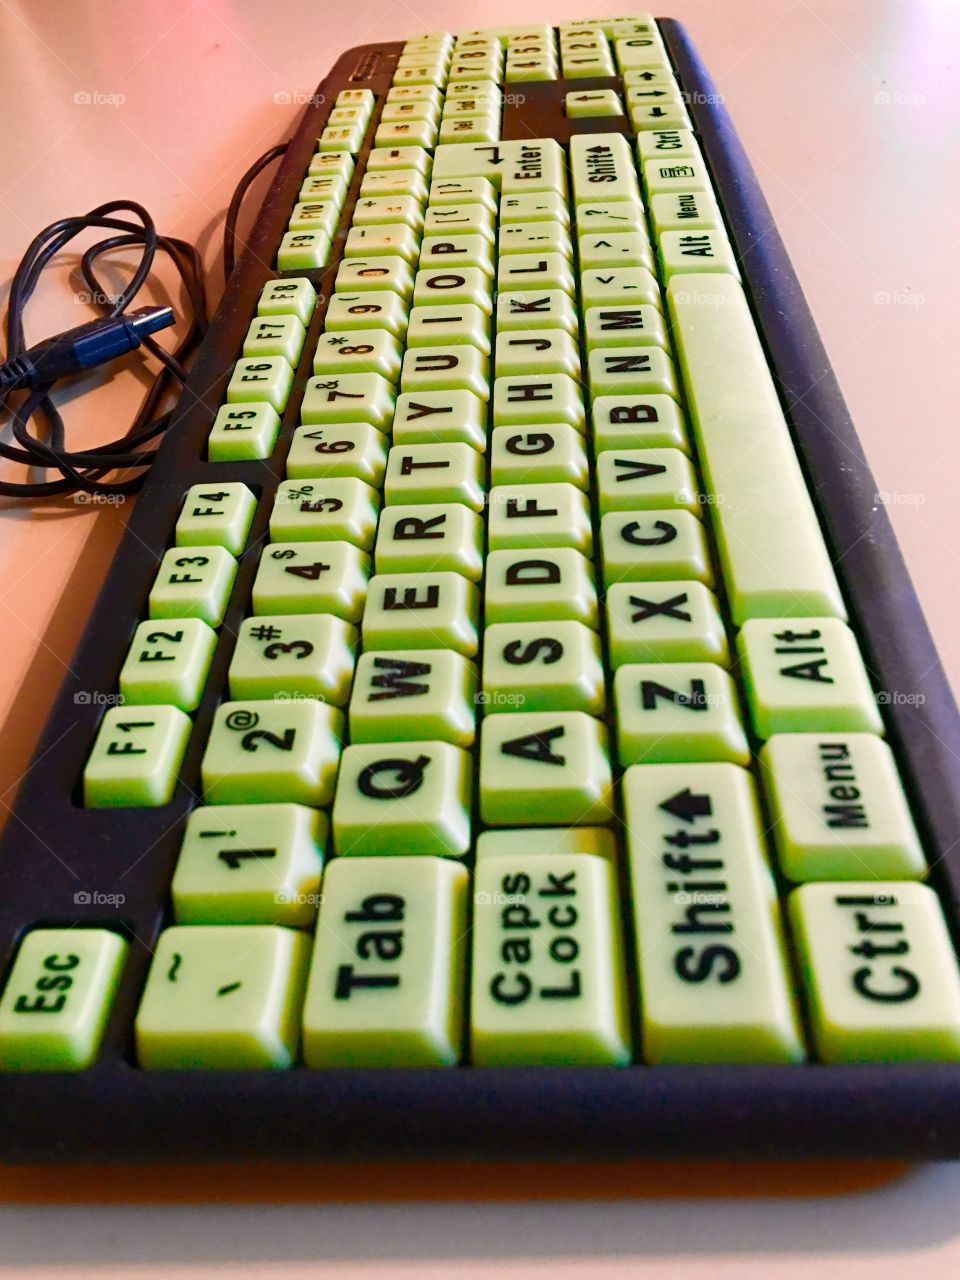 Glow-in-the-Dark Computer Keyboard 